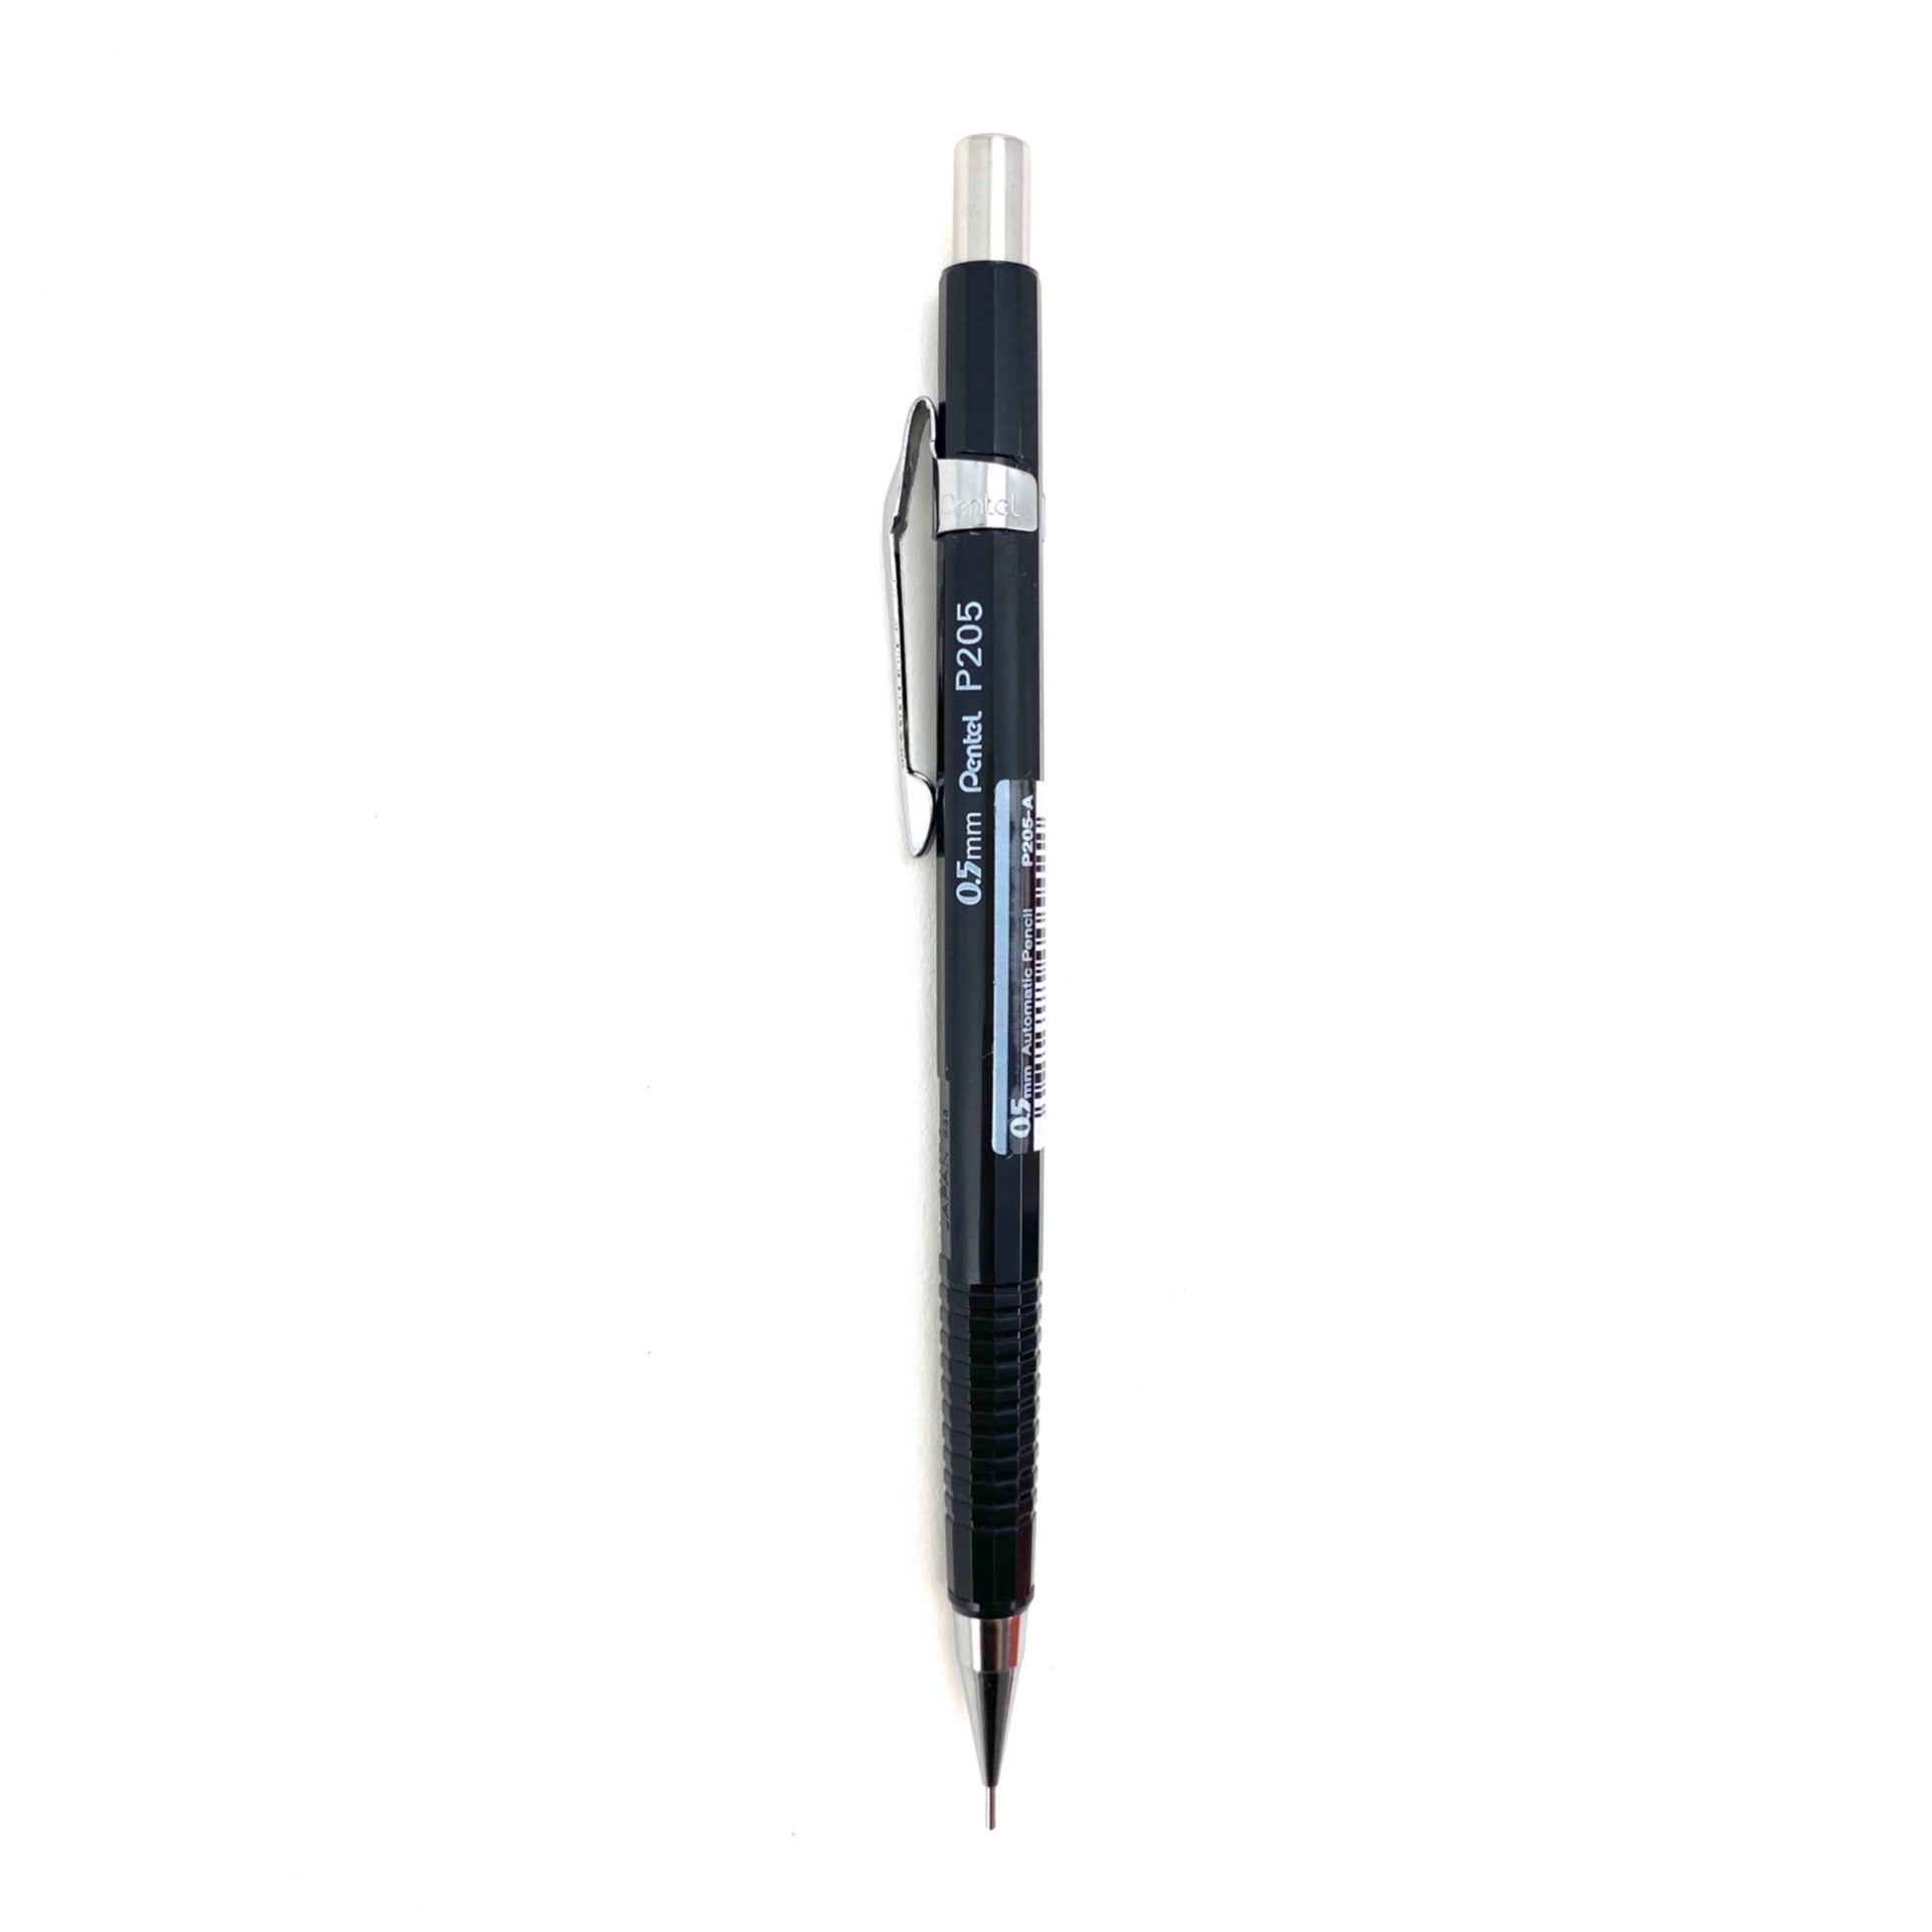 Pentel Sharp Mechanical Pencil - 0.5mm / Black by Pentel - K. A. Artist Shop